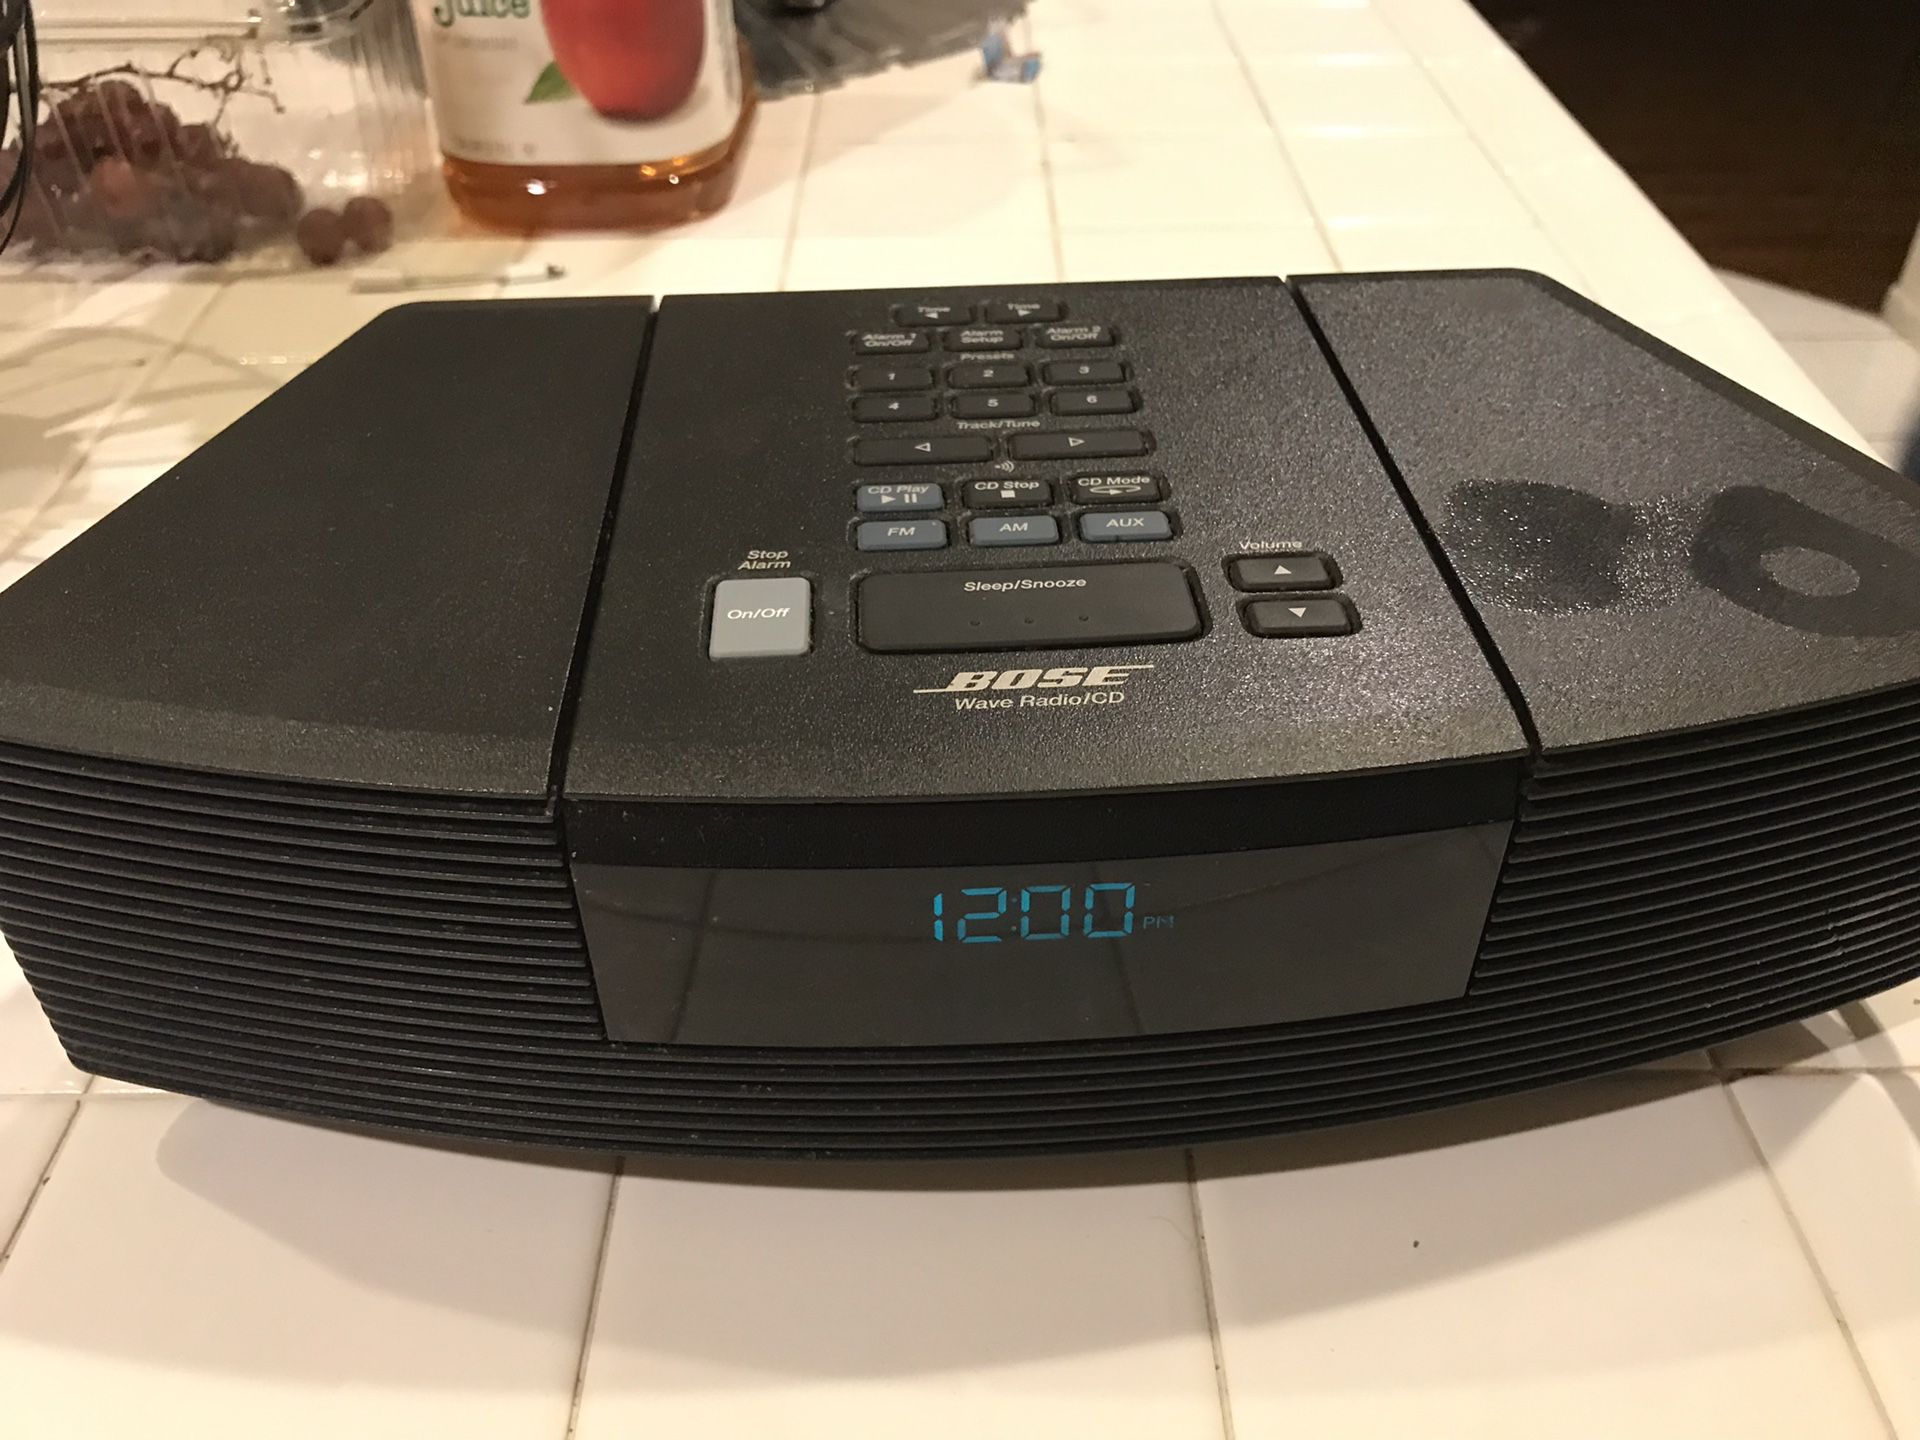 Bose Wave Radio/CD for Sale in Las Vegas, NV - OfferUp